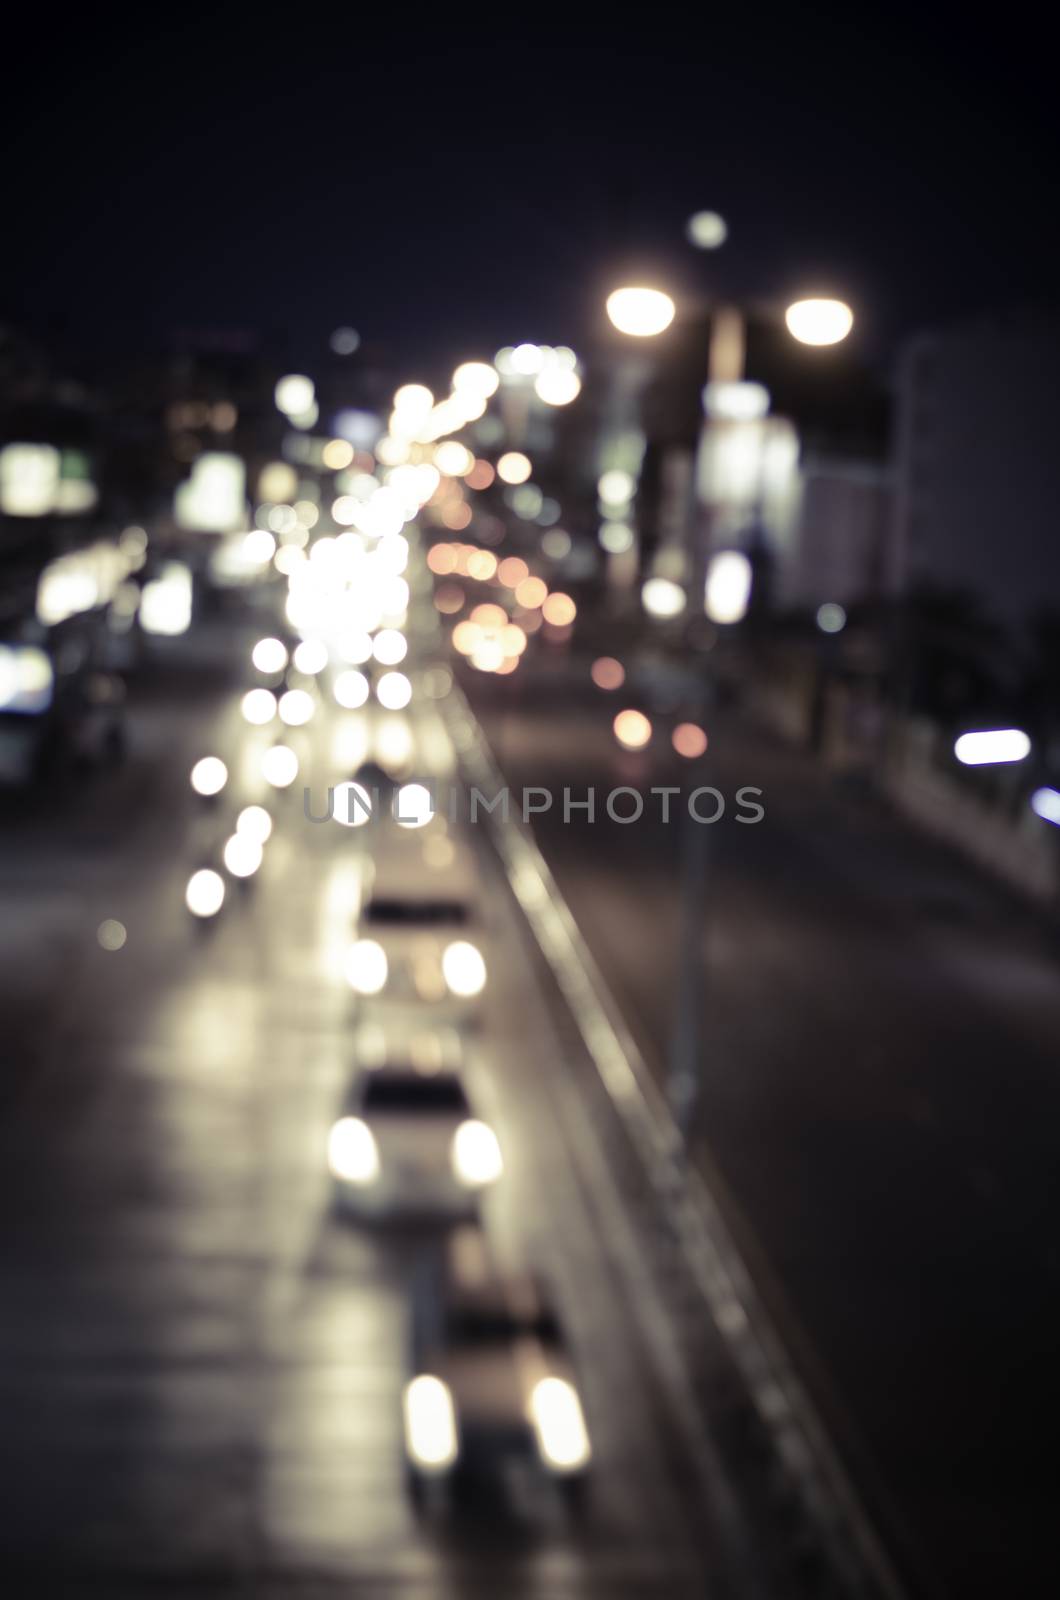 blur cars traffic on urban street tone vintage. by photobyphotoboy